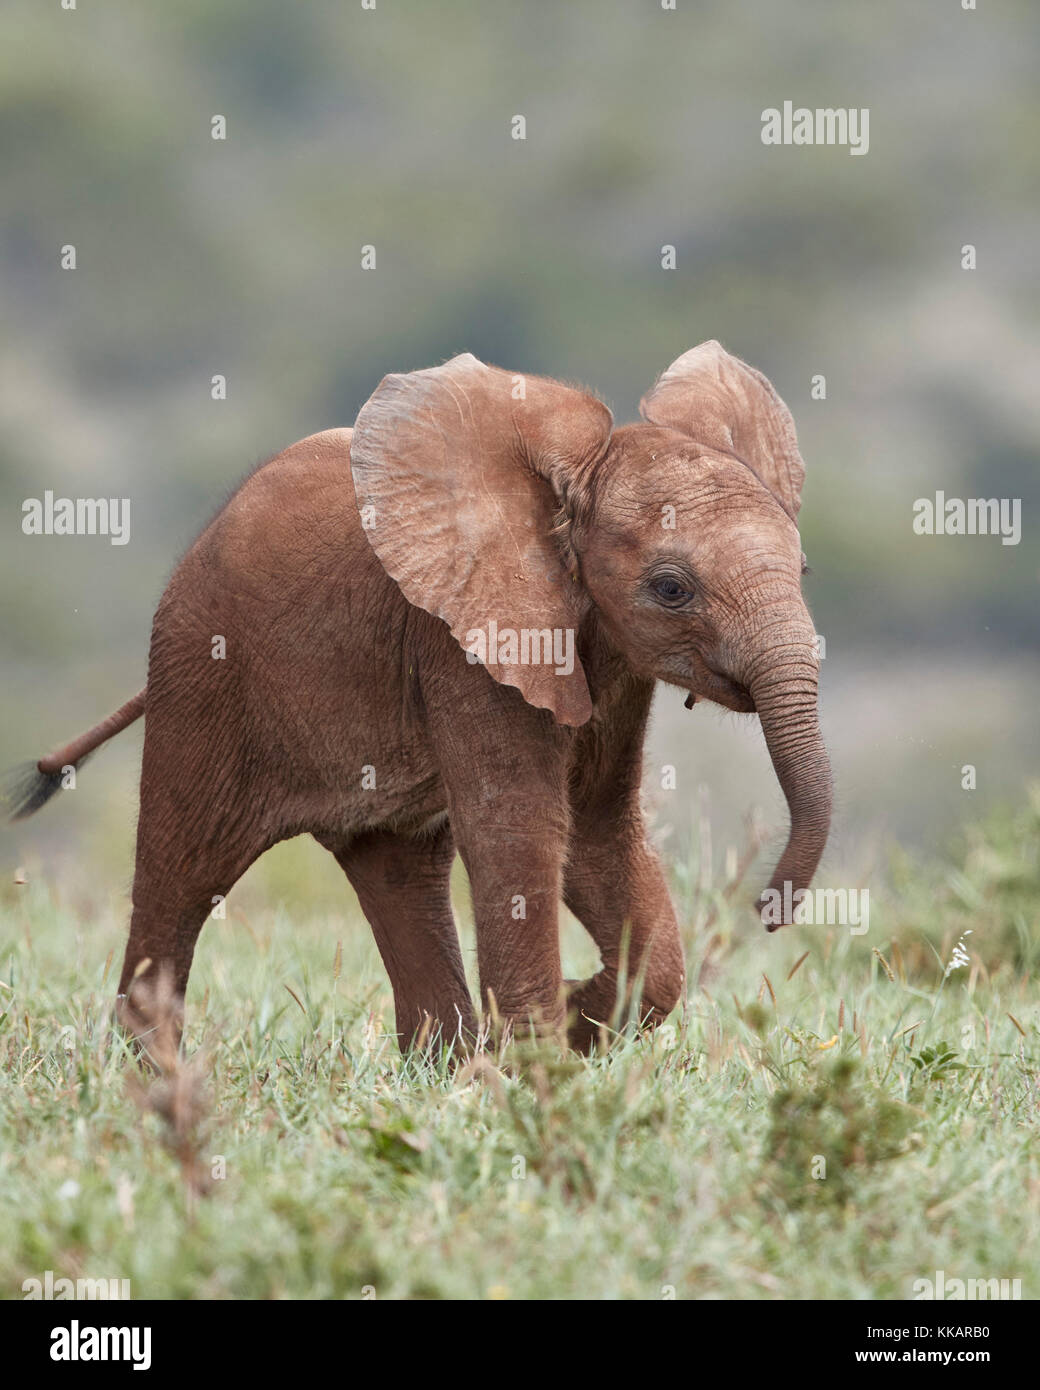 Elefante africano (Loxodonta africana), baby in esecuzione con i suoi orecchi, Addo Elephant national park, Sud Africa e Africa Foto Stock